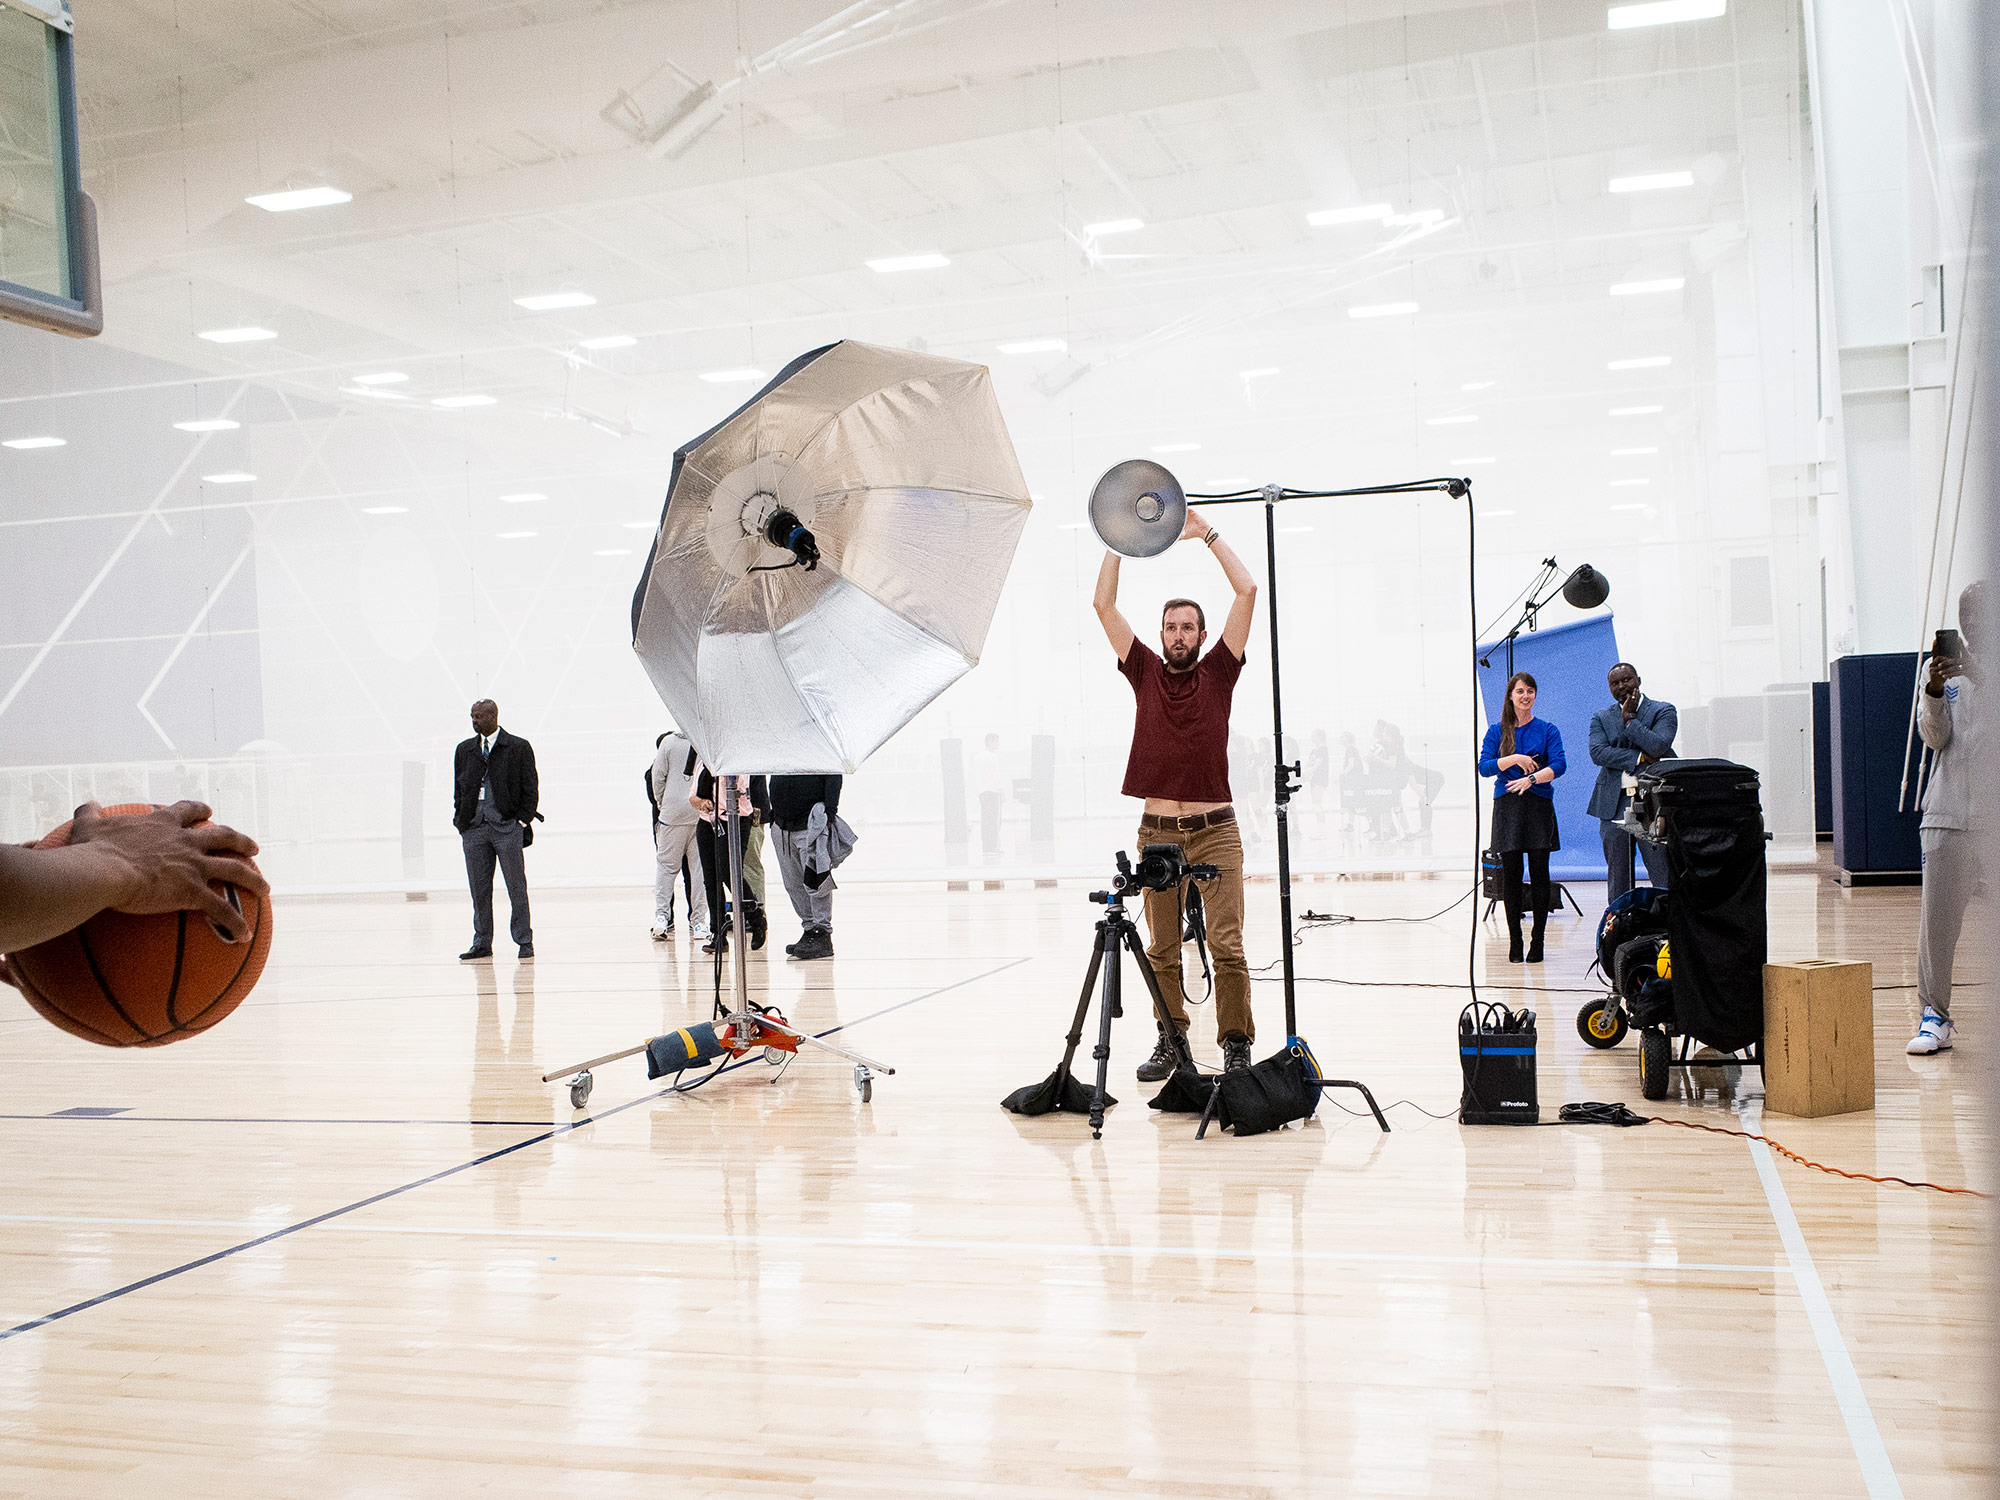 Philadelphia Sports Photographer Steve Boyle  - Behind the Scenes Photoshoot - Basketball